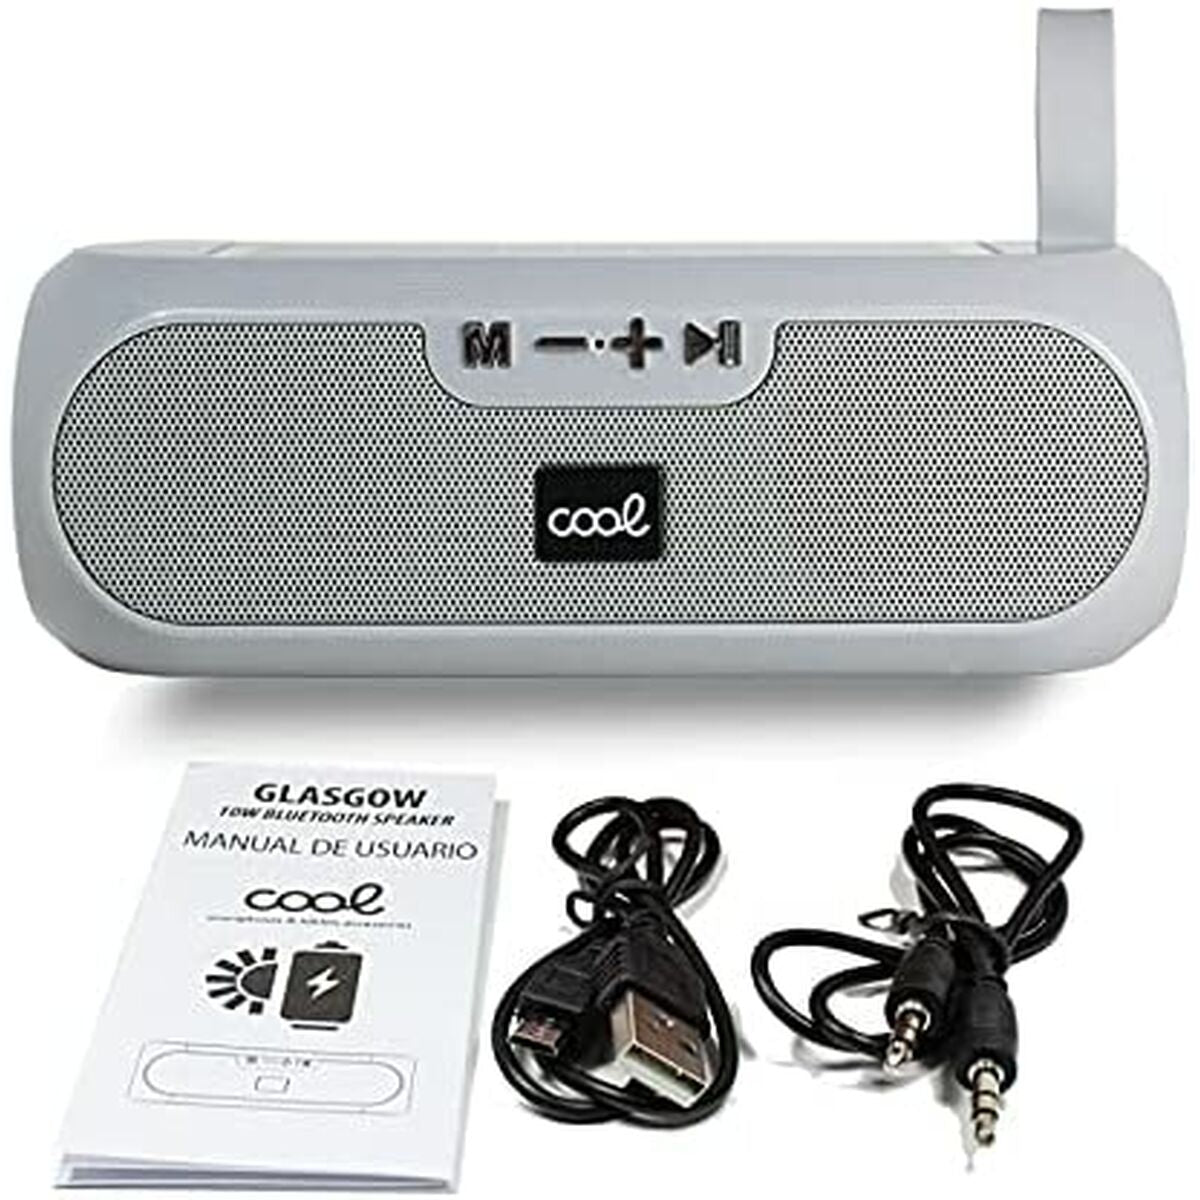 Tragbare Bluetooth-Lautsprecher Cool Glasgow Grau